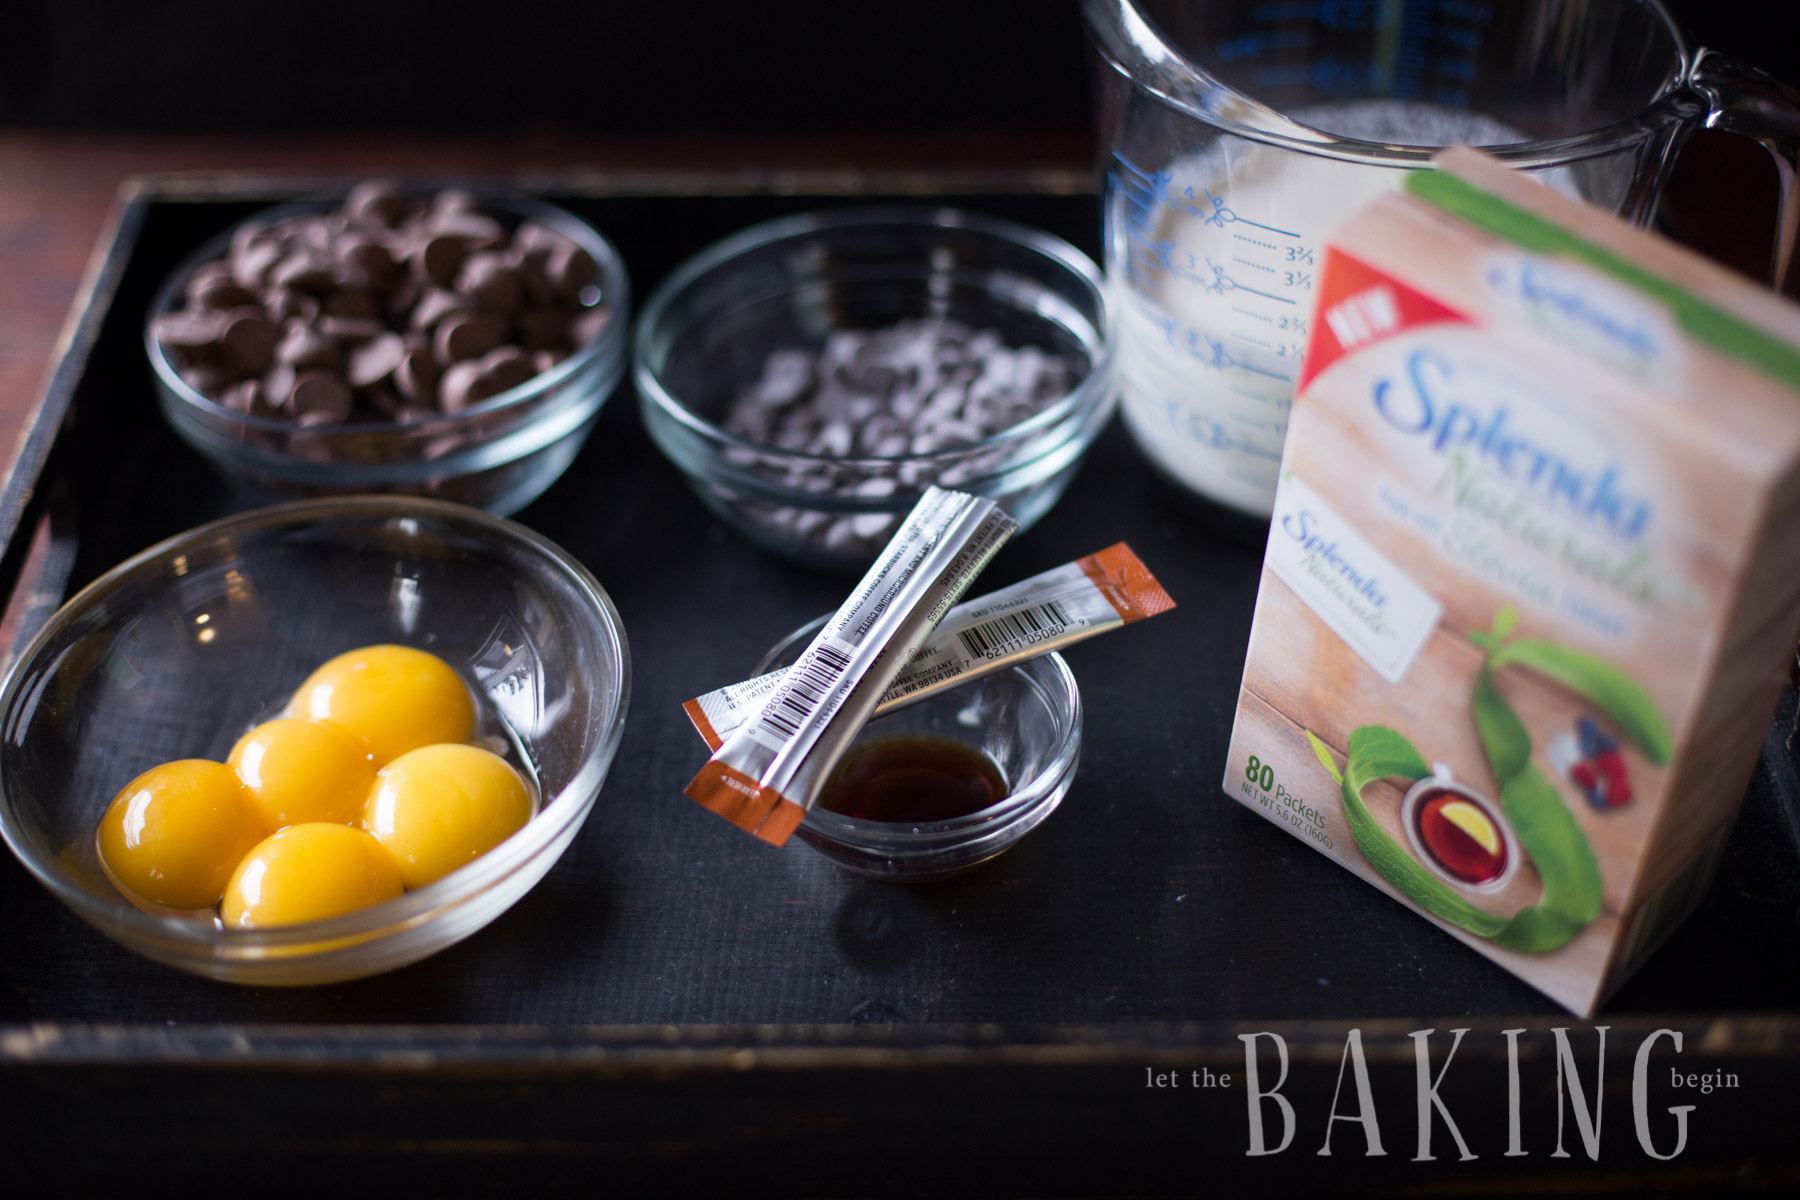 Ingredients for pot de creme including chocolate, egg yolks, creme, splenda